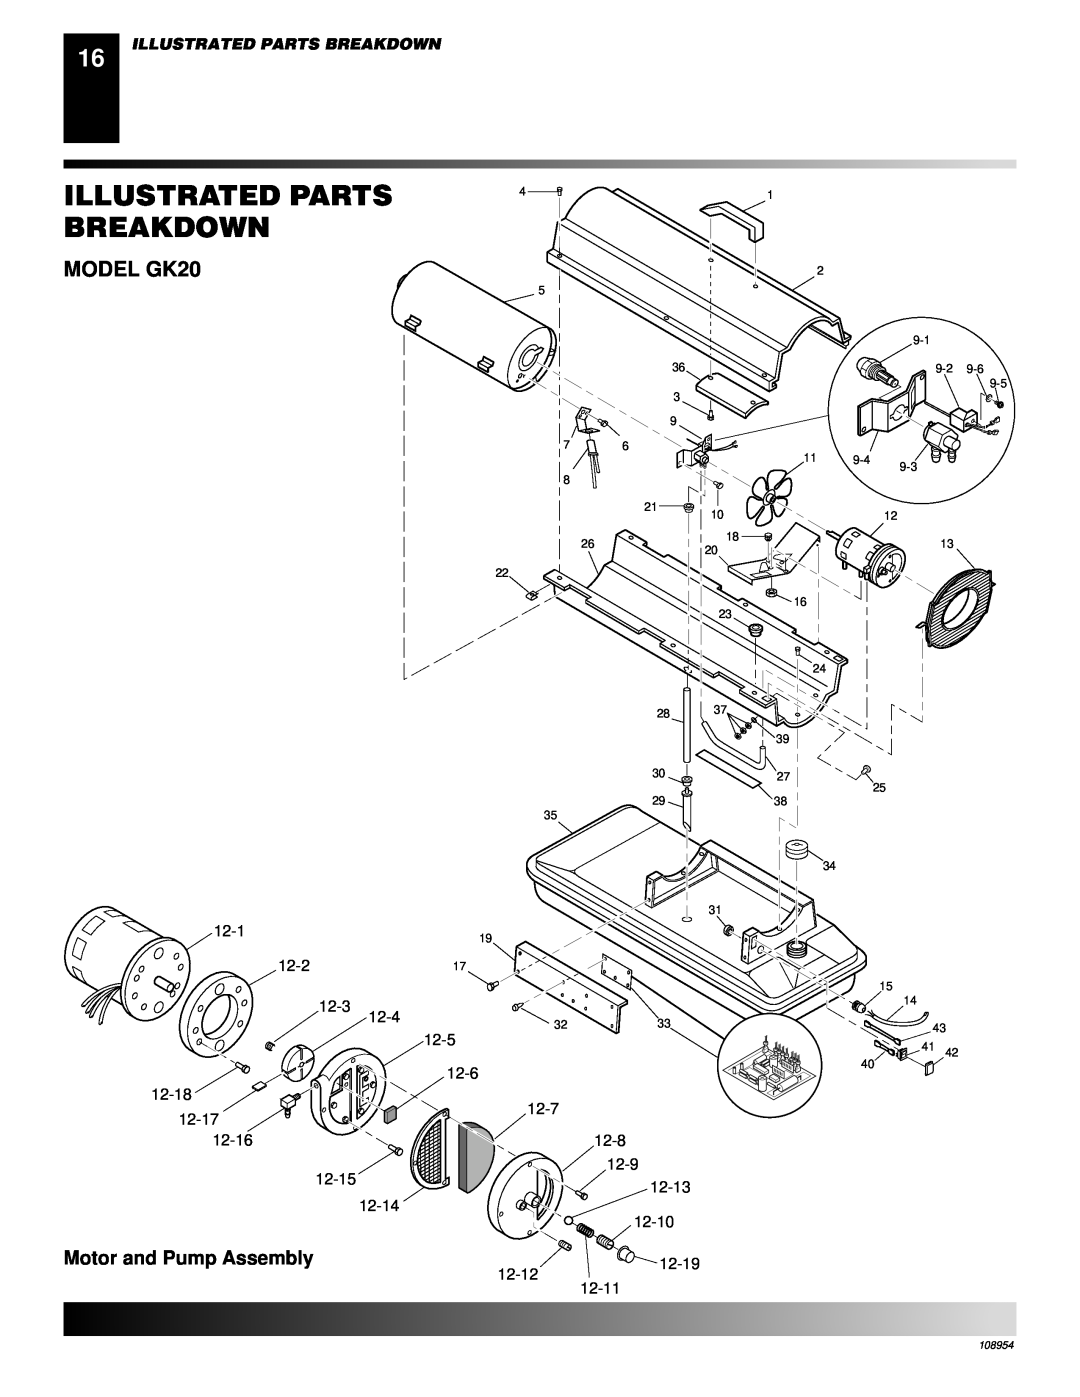 Desa GK30 owner manual Illustrated Parts Breakdown, MODEL GK20, Motor and Pump Assembly 